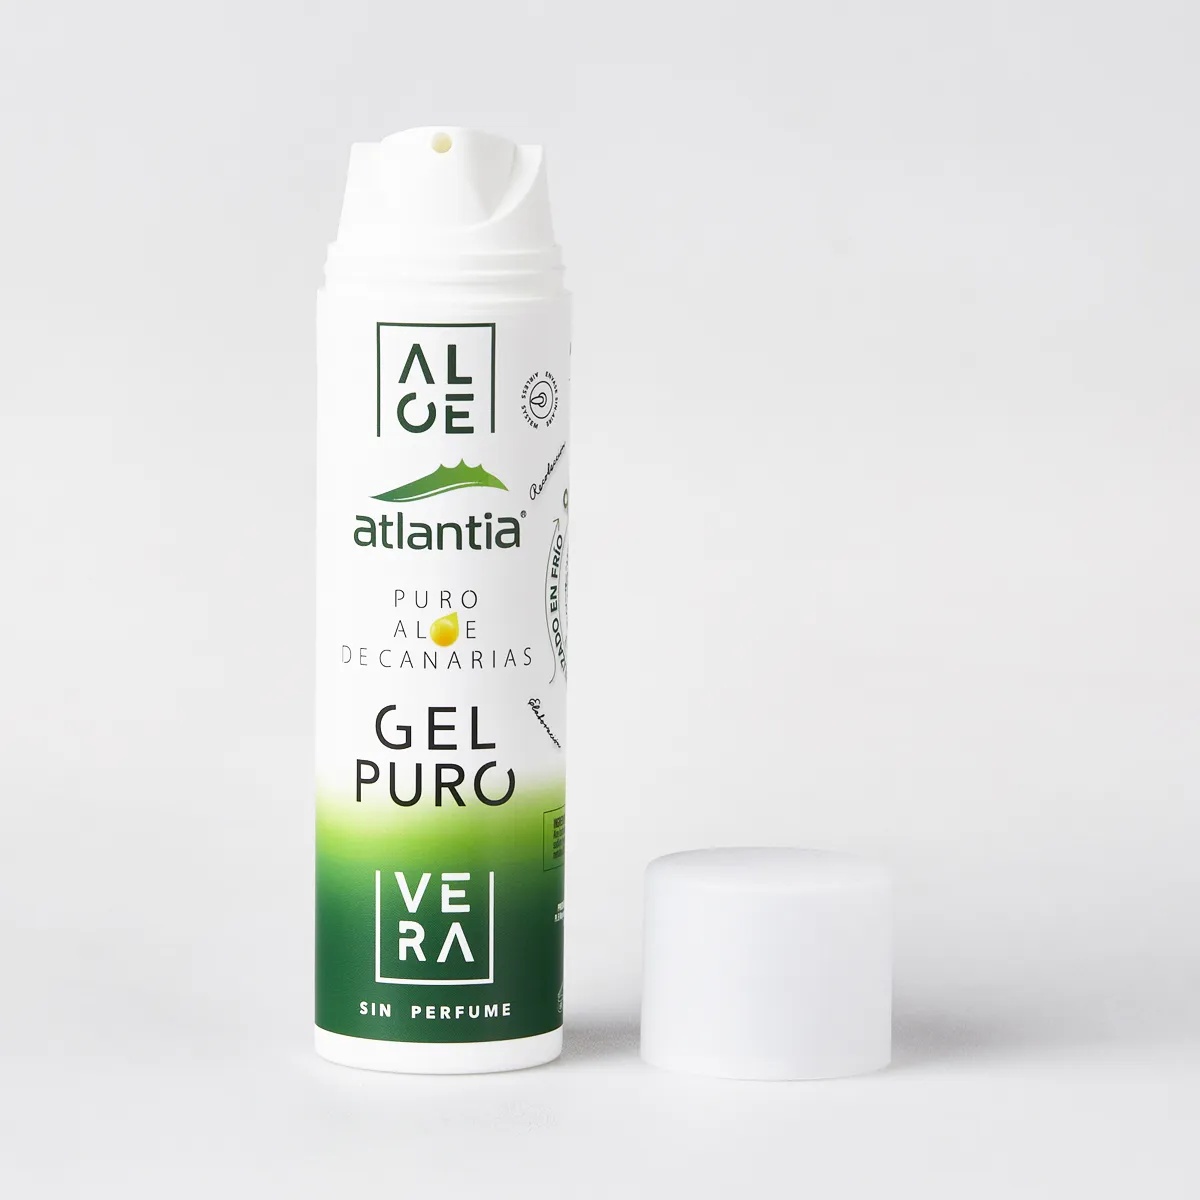 Atlantia Aloe Vera 96% čistý gel 75 ml